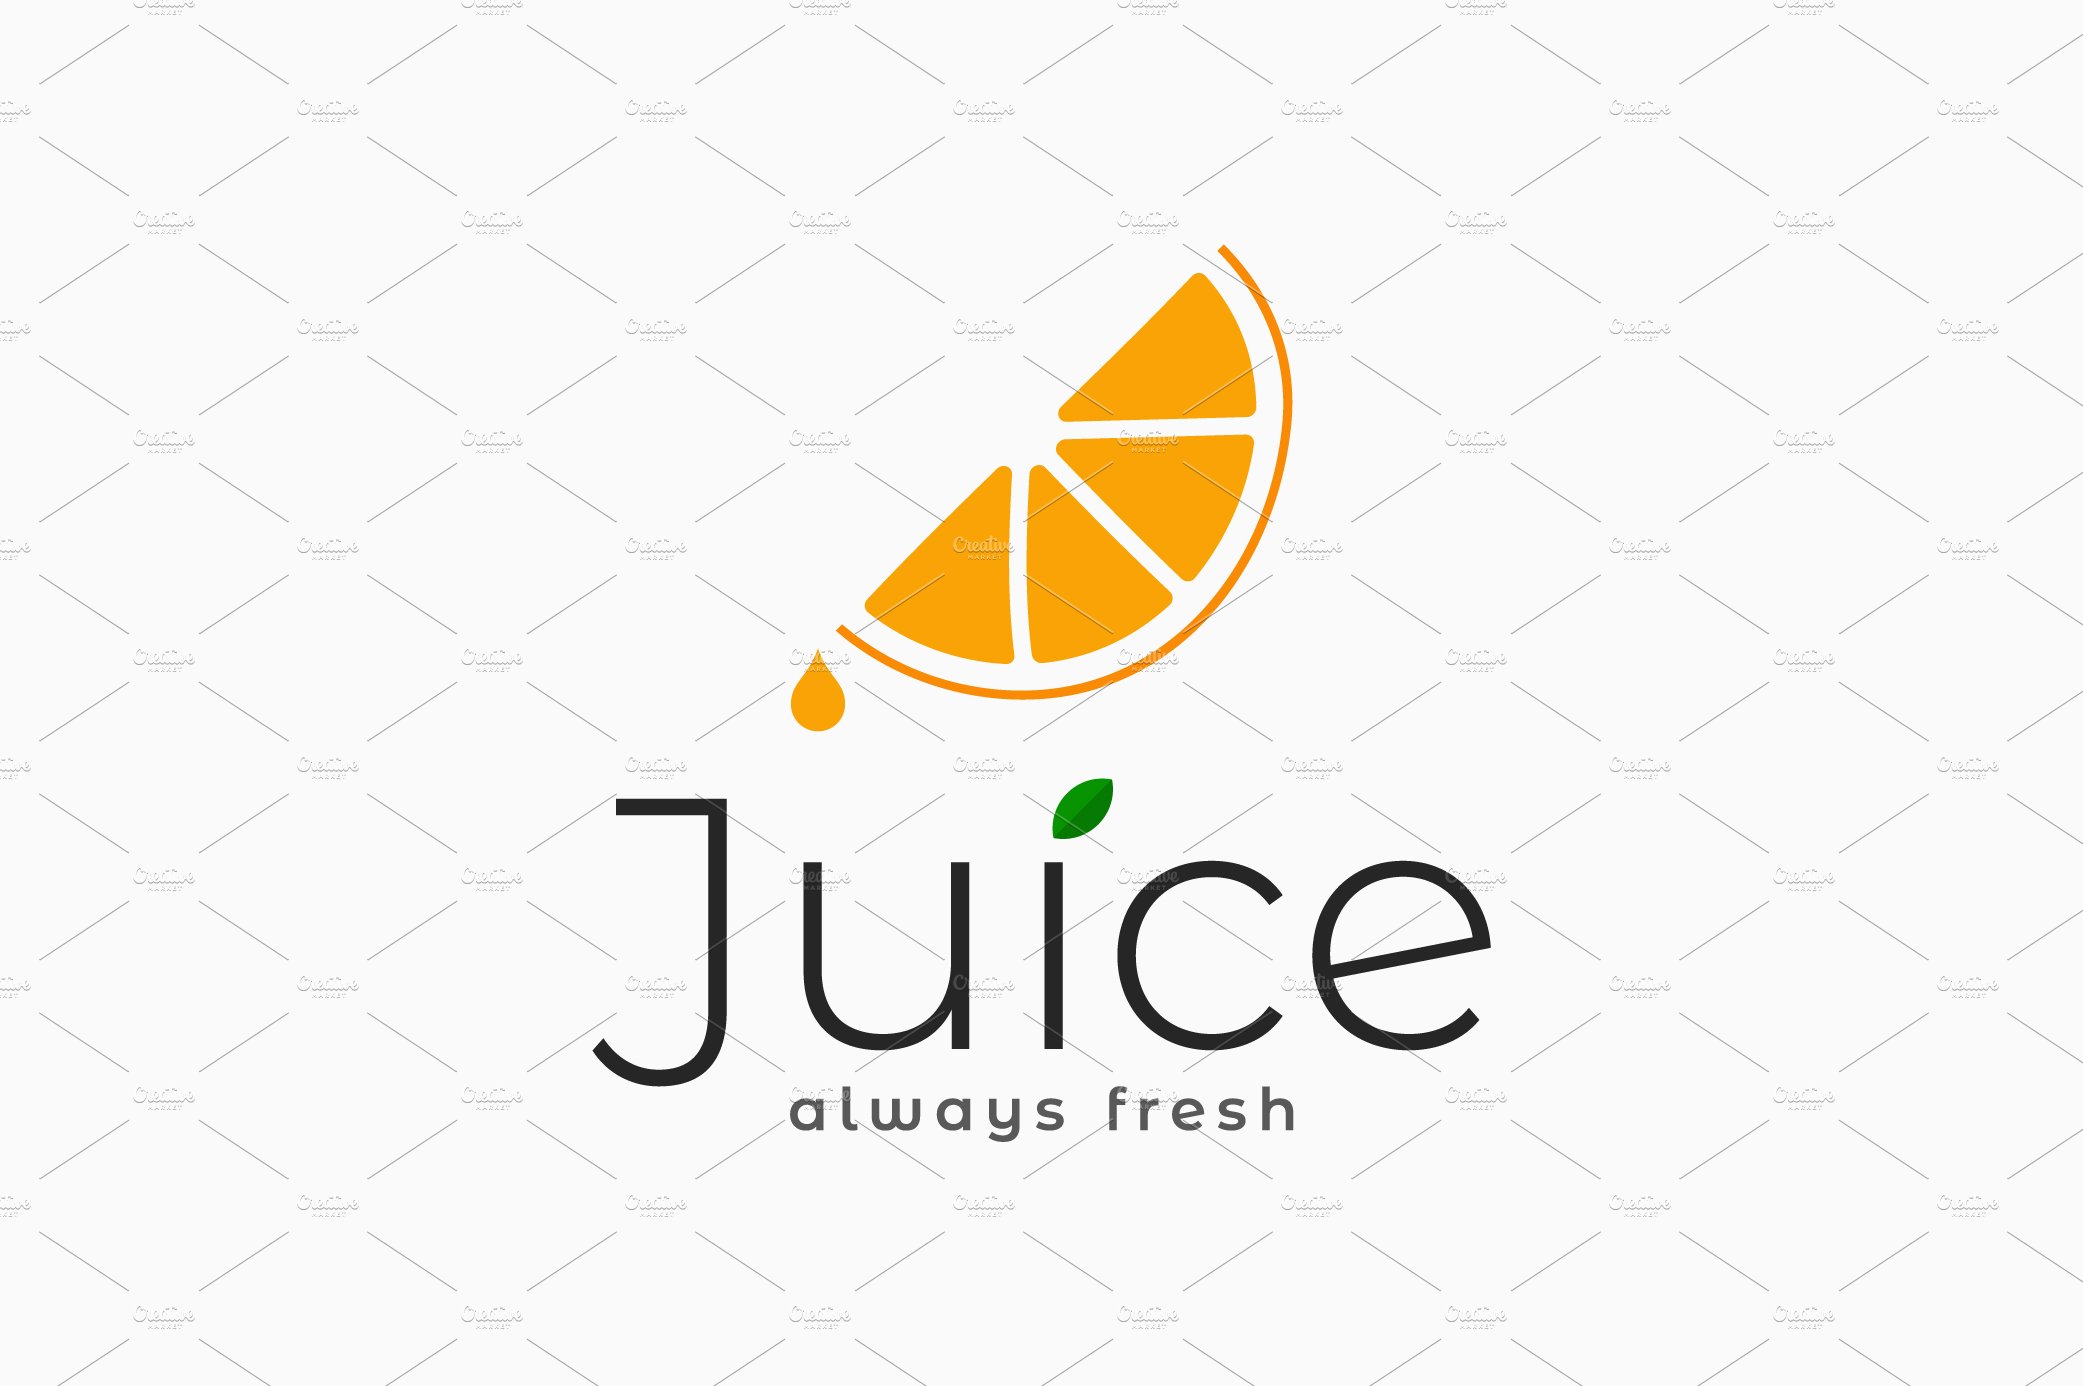 Juice logo with orange slice. cover image.